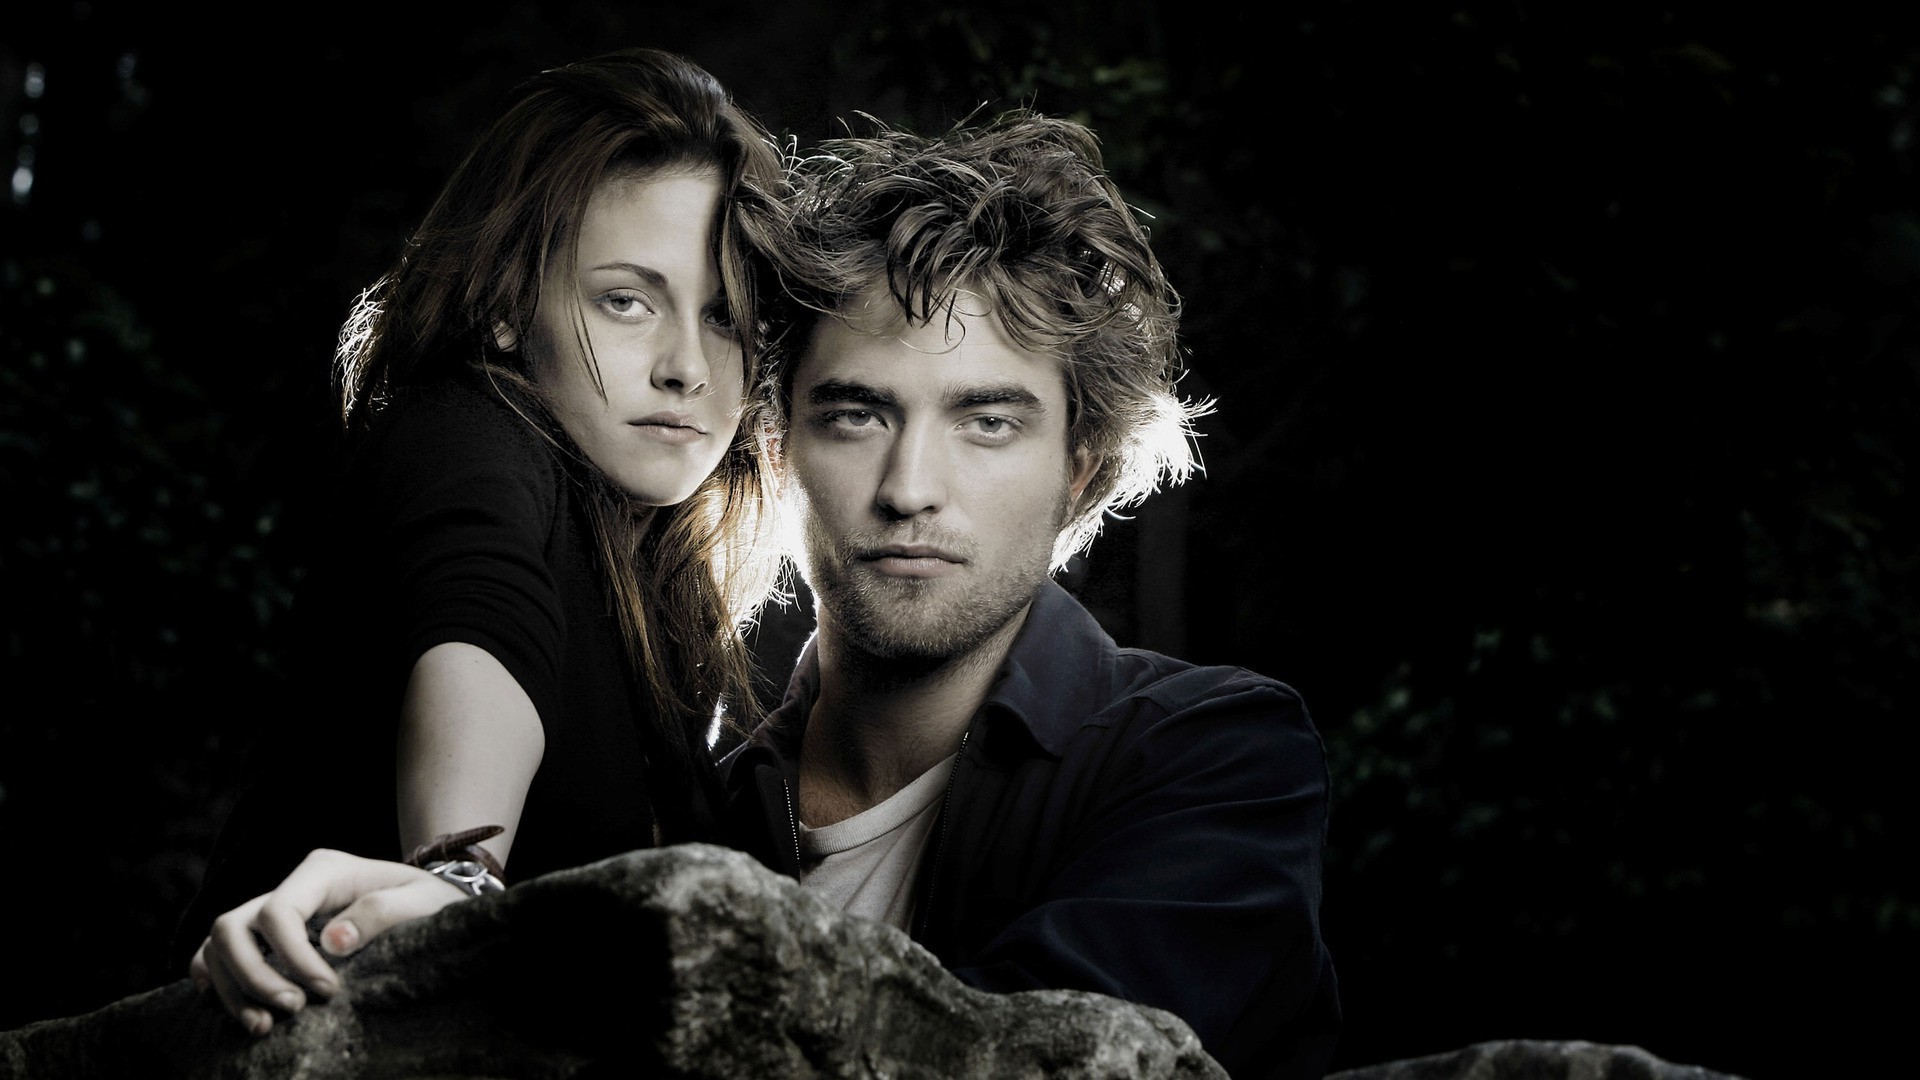 Twilight, Kristen Stewart, Robert Pattinson Wallpapers HD ...
 Kristen Stewart And Robert Pattinson Twilight Wallpaper